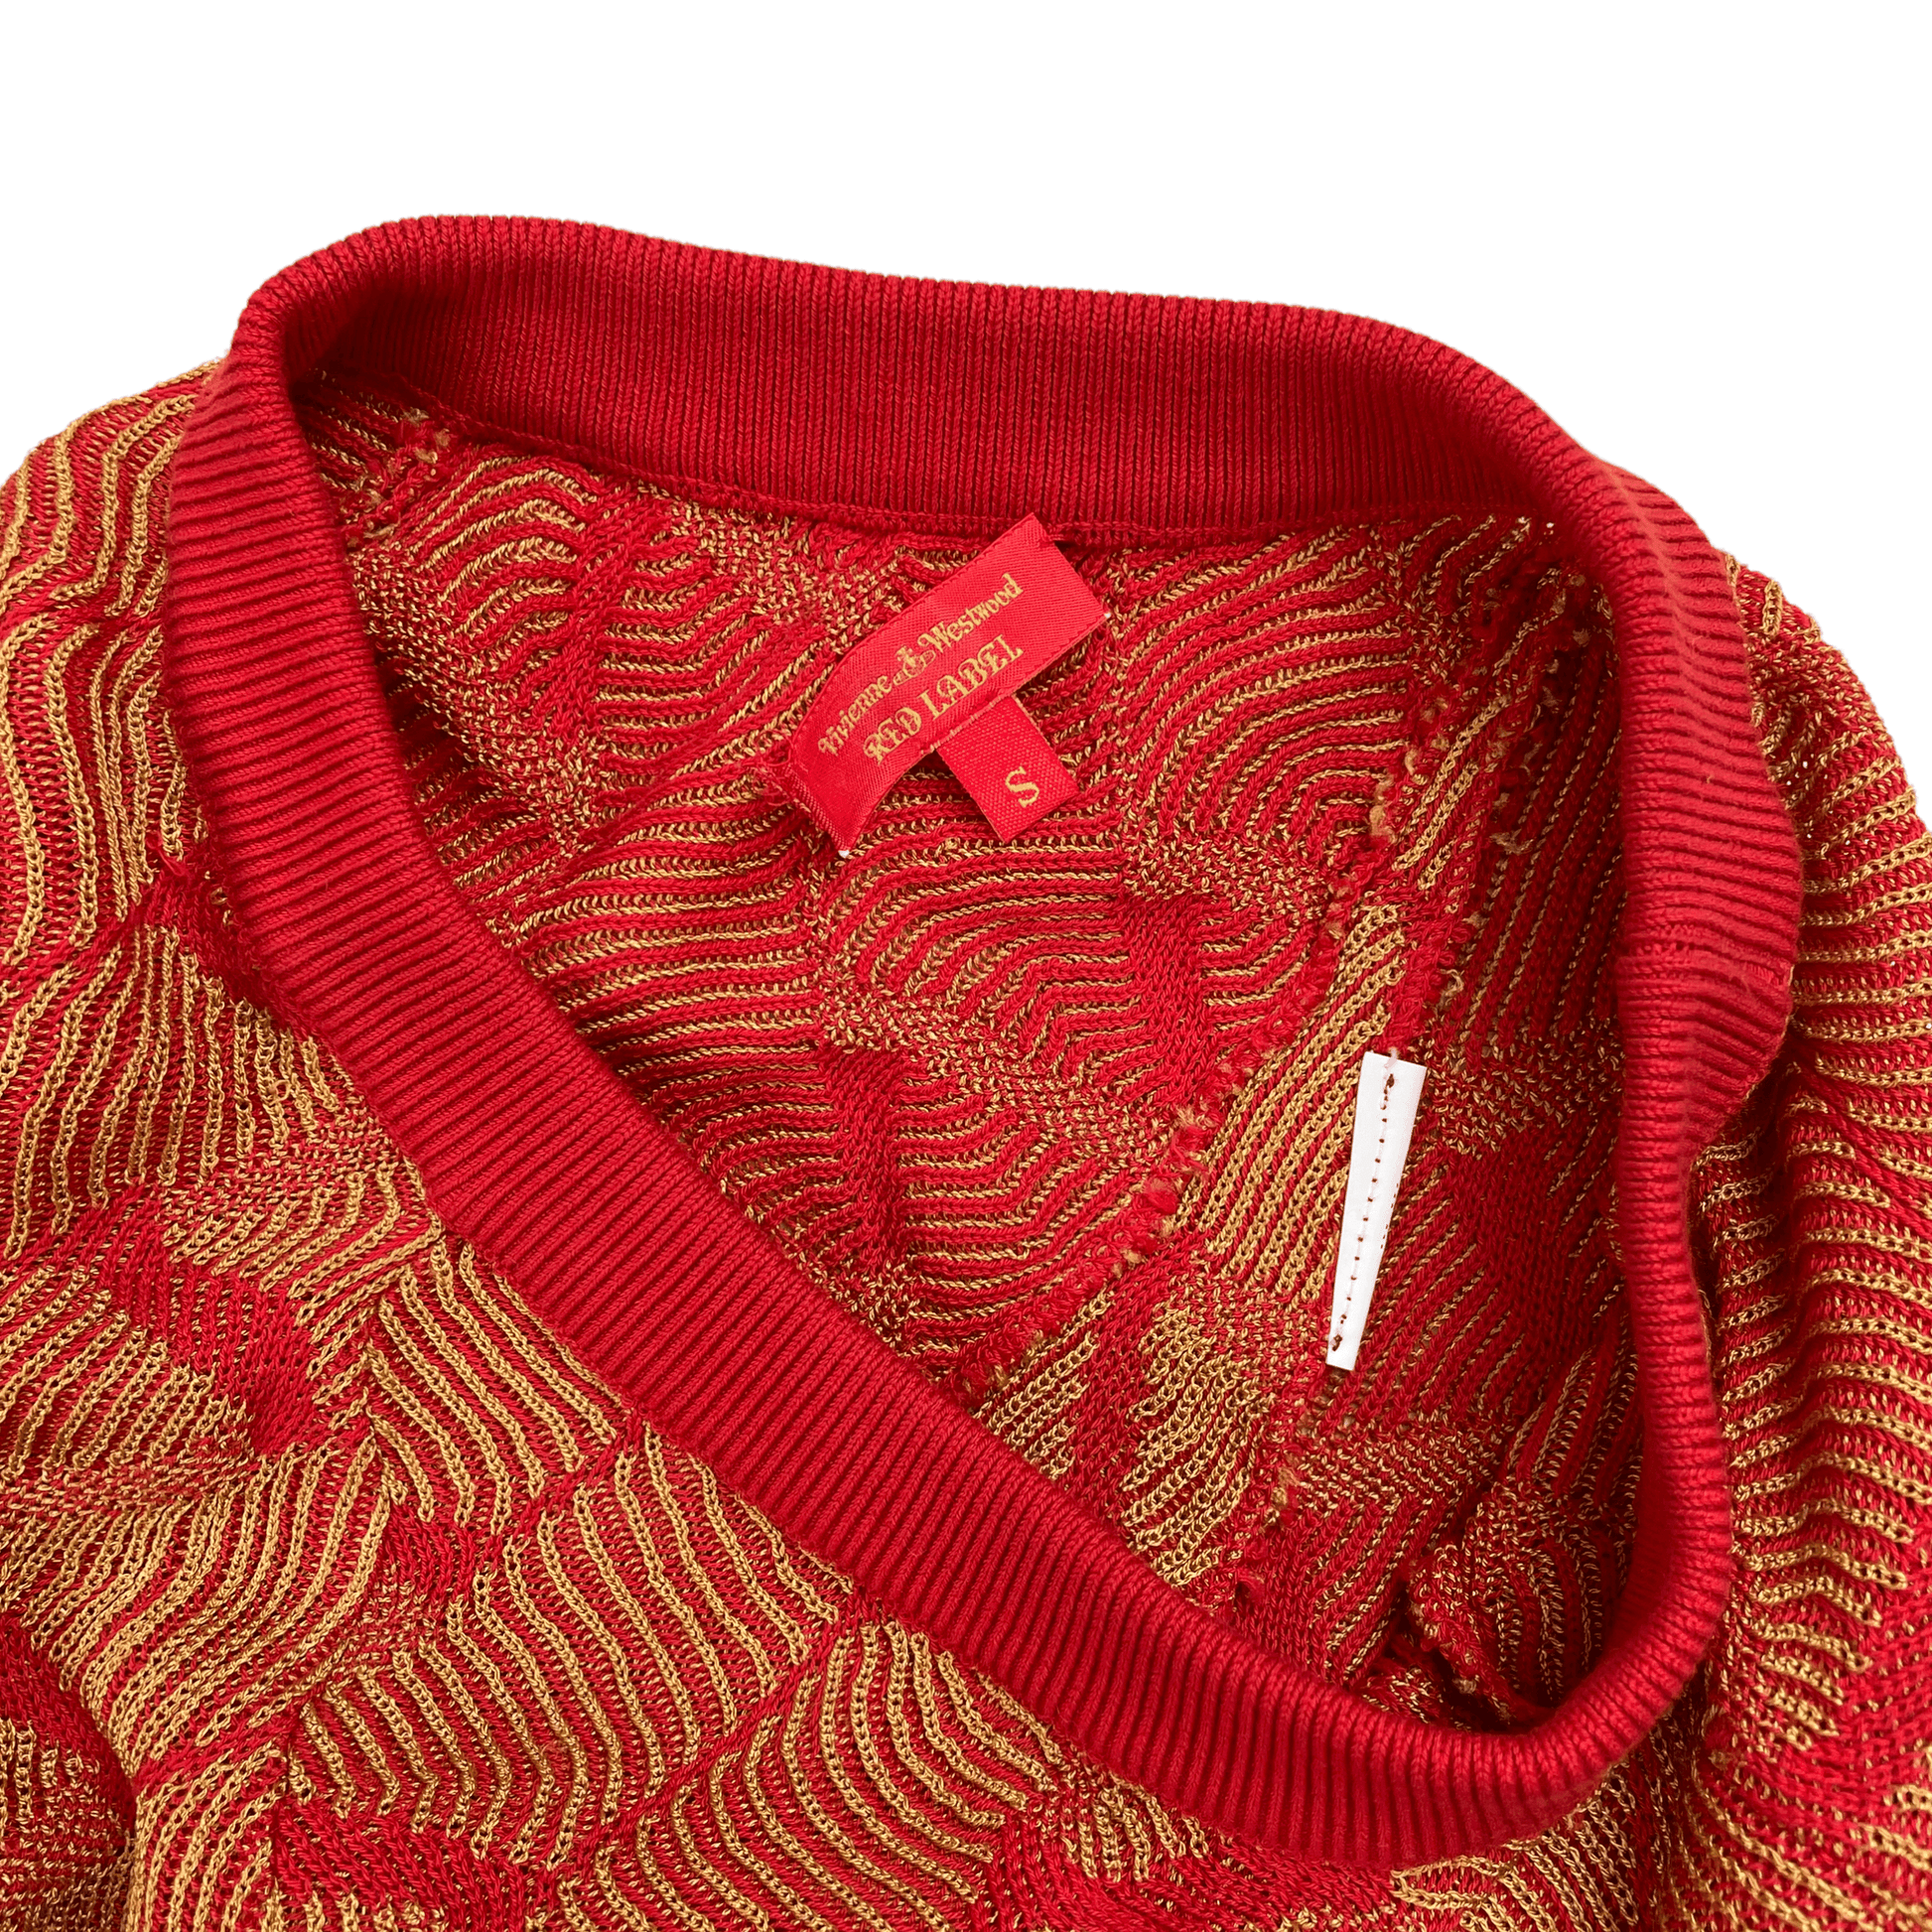 c.2018 Vivienne Westwood knit skirt - Known Source